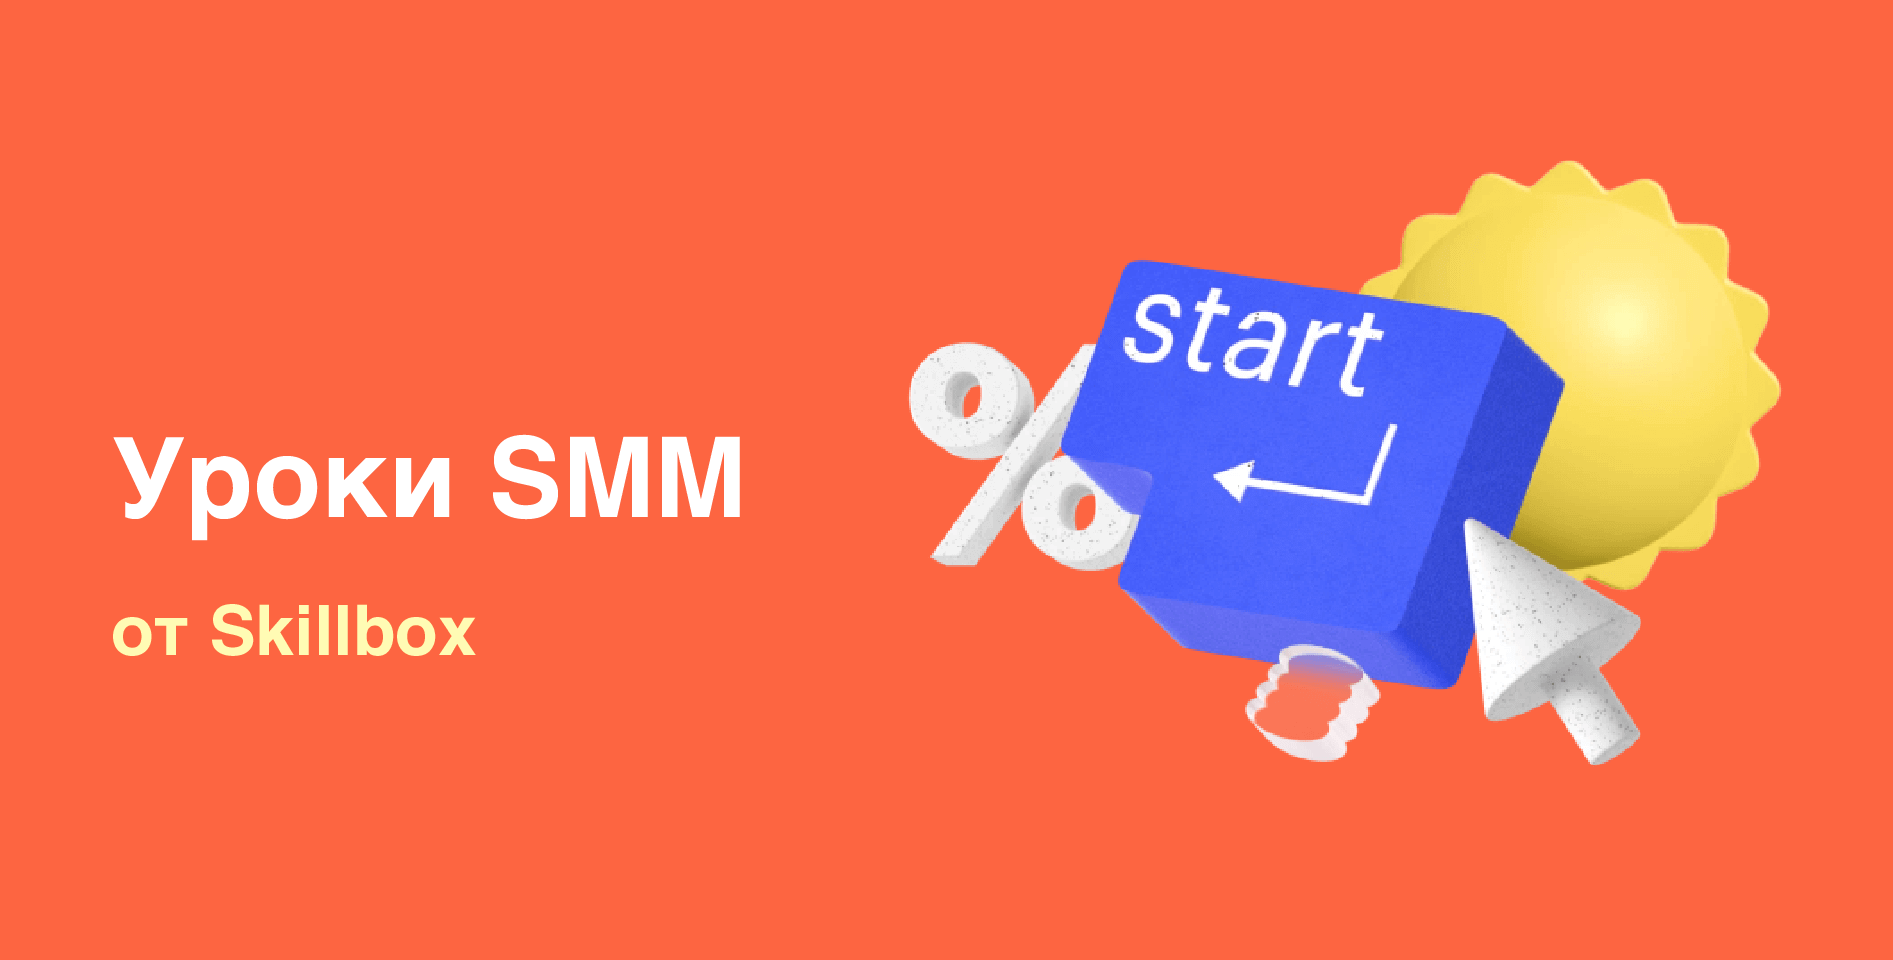  Skillbox — «Уроки SMM»